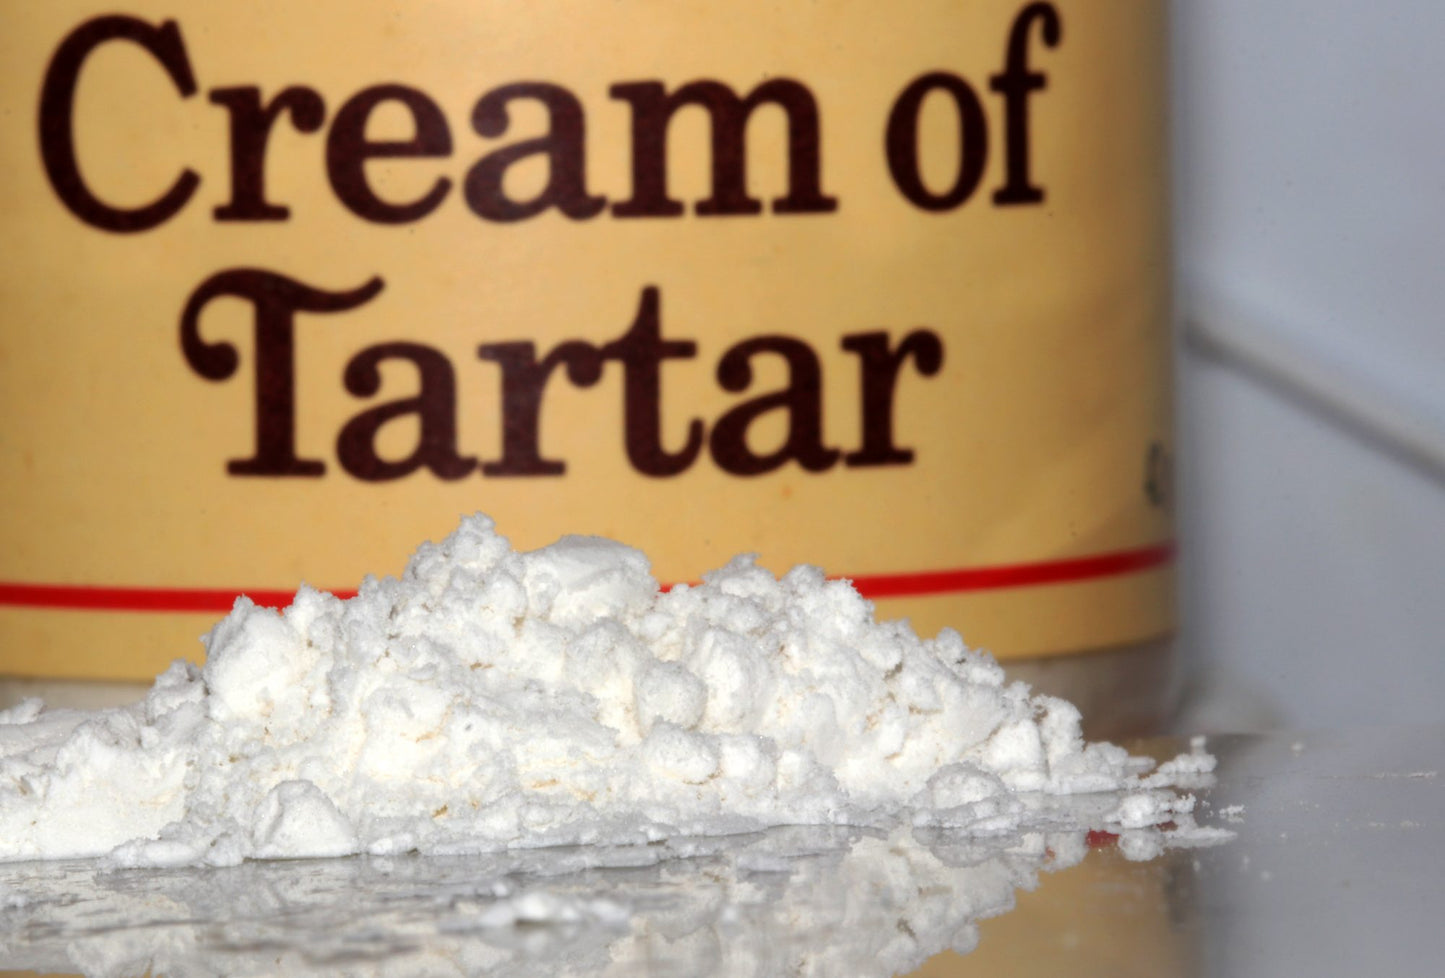 Cream of Tartar 1.5kg